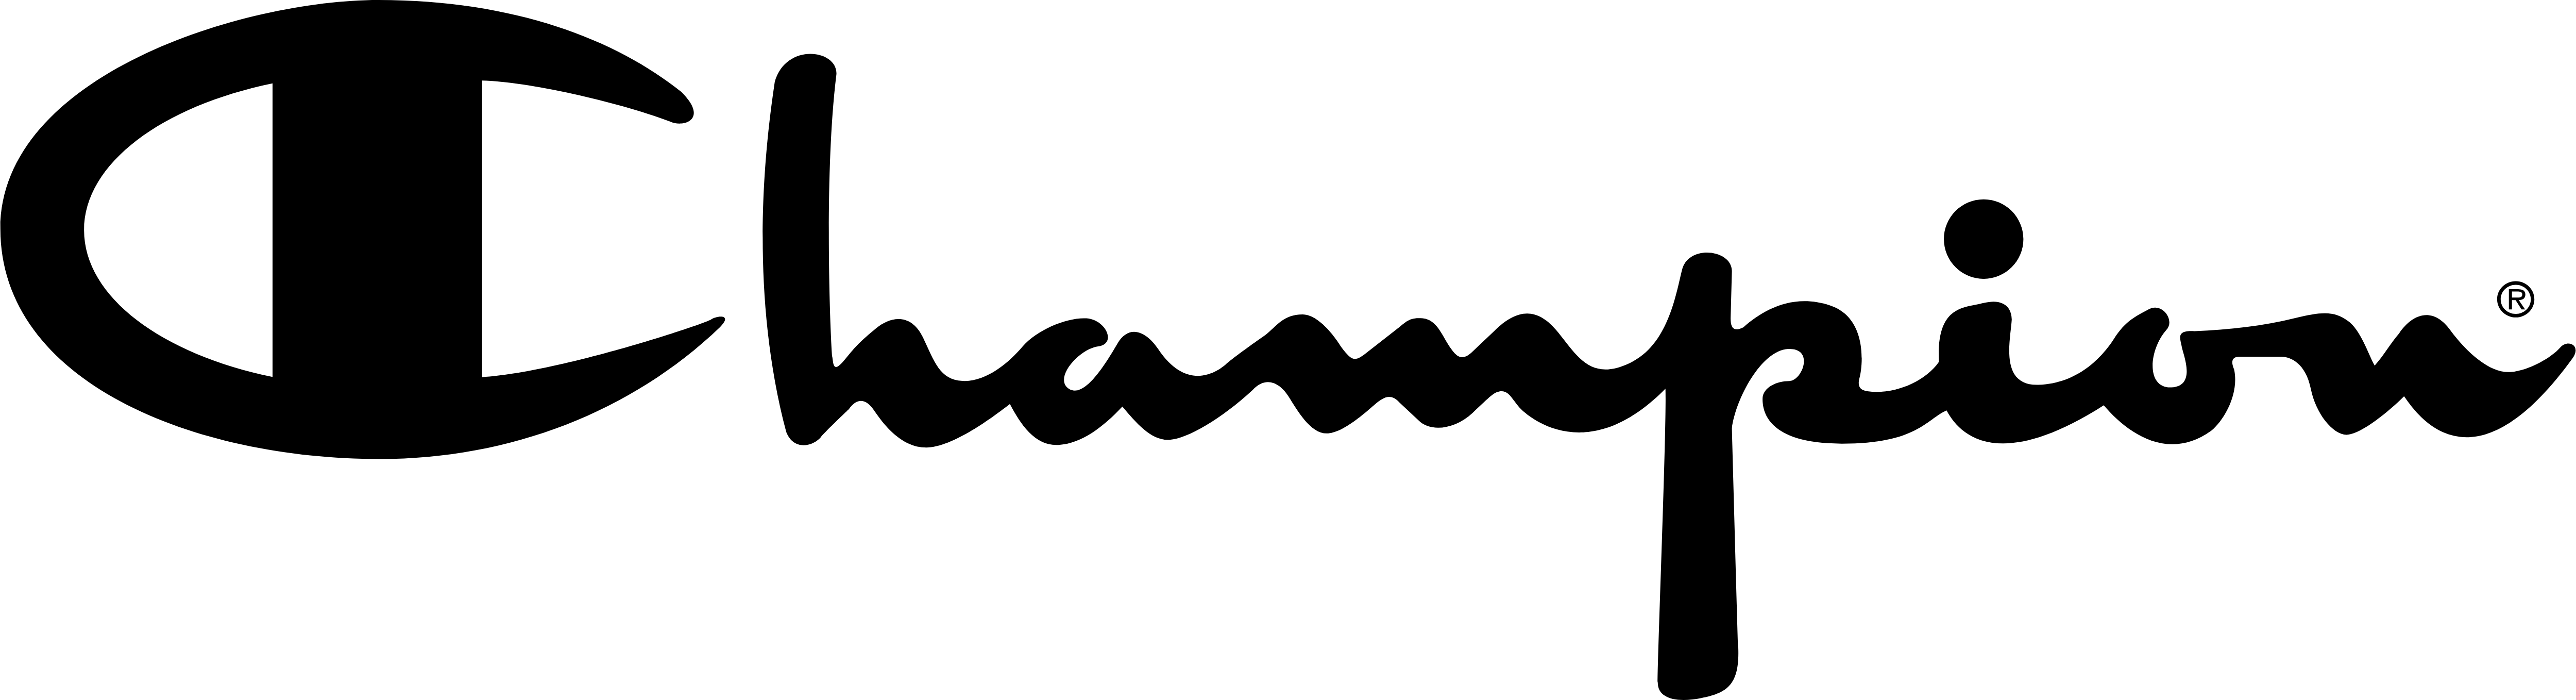 Champion Logo PNG - 175287